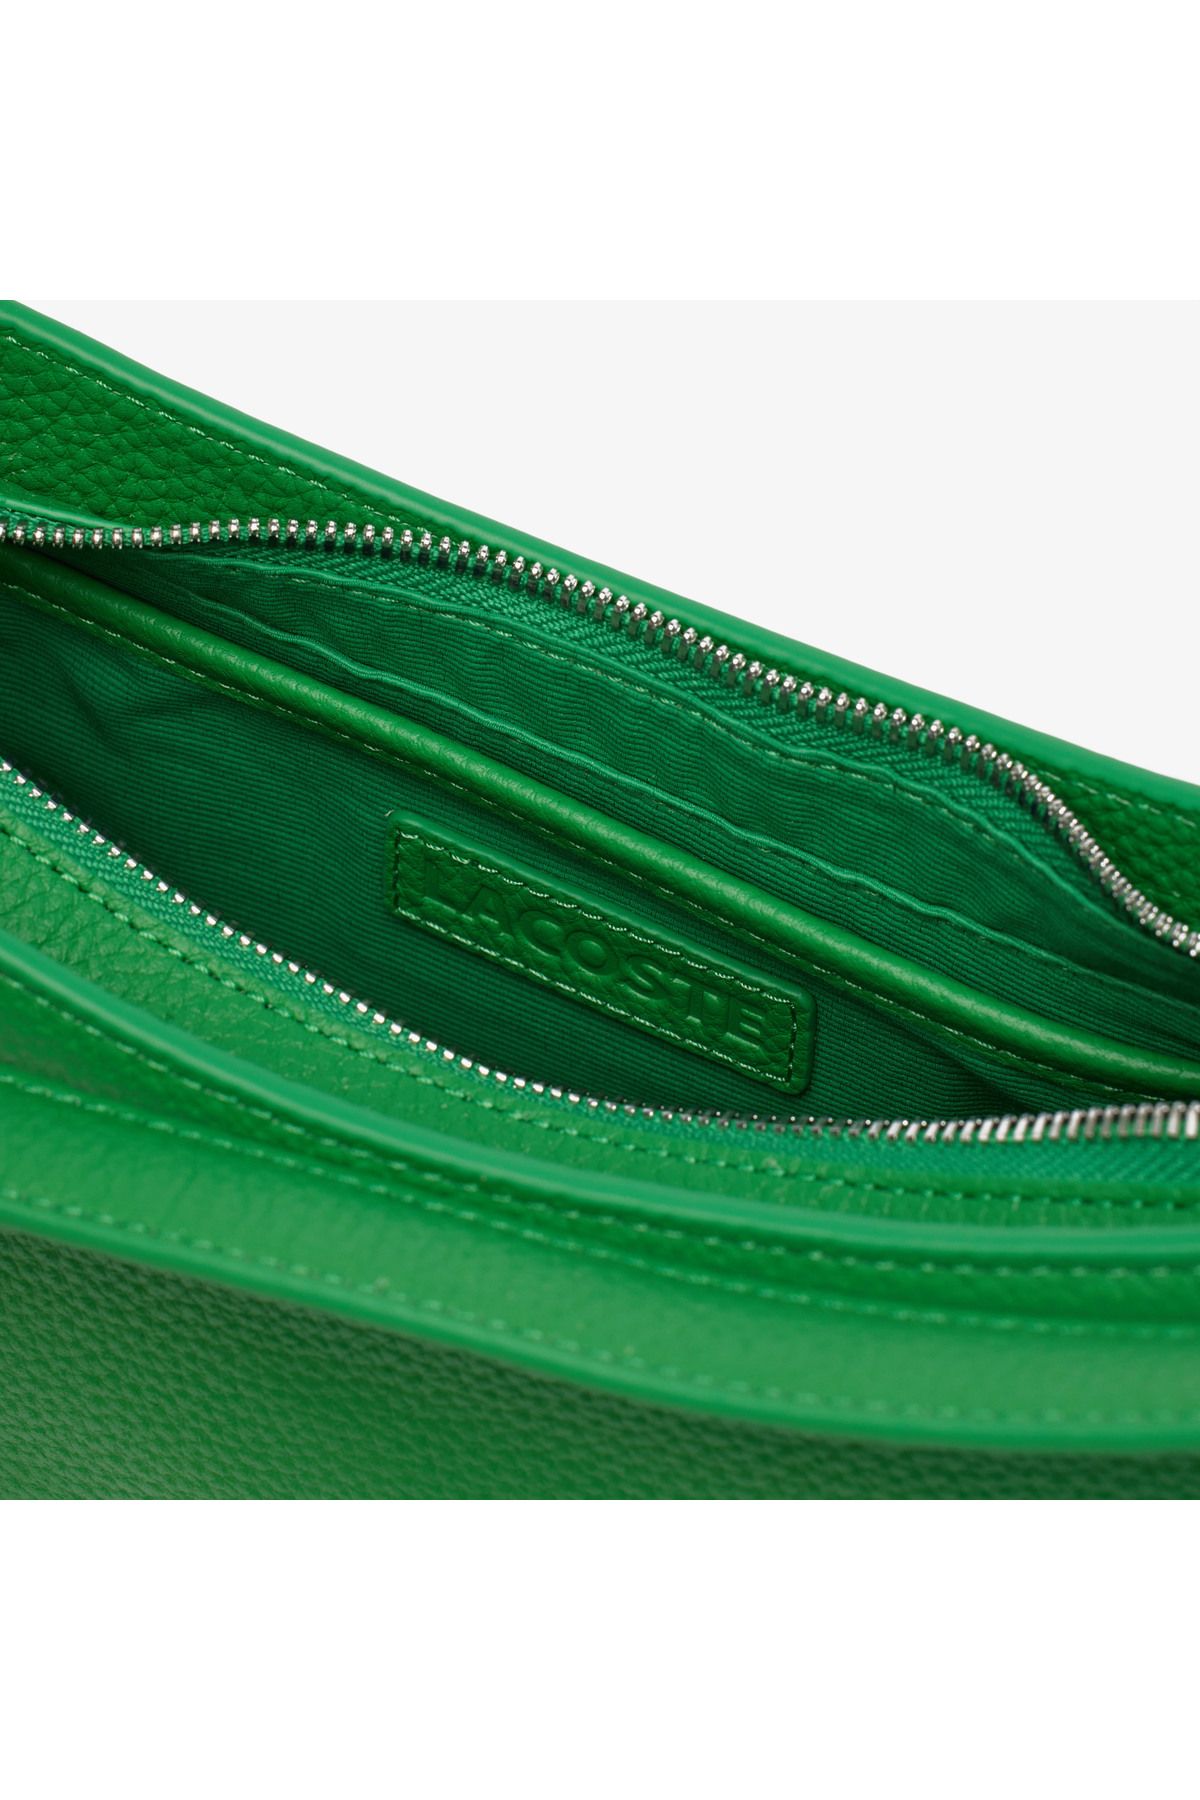 Lacoste کیف شانه سبز زن